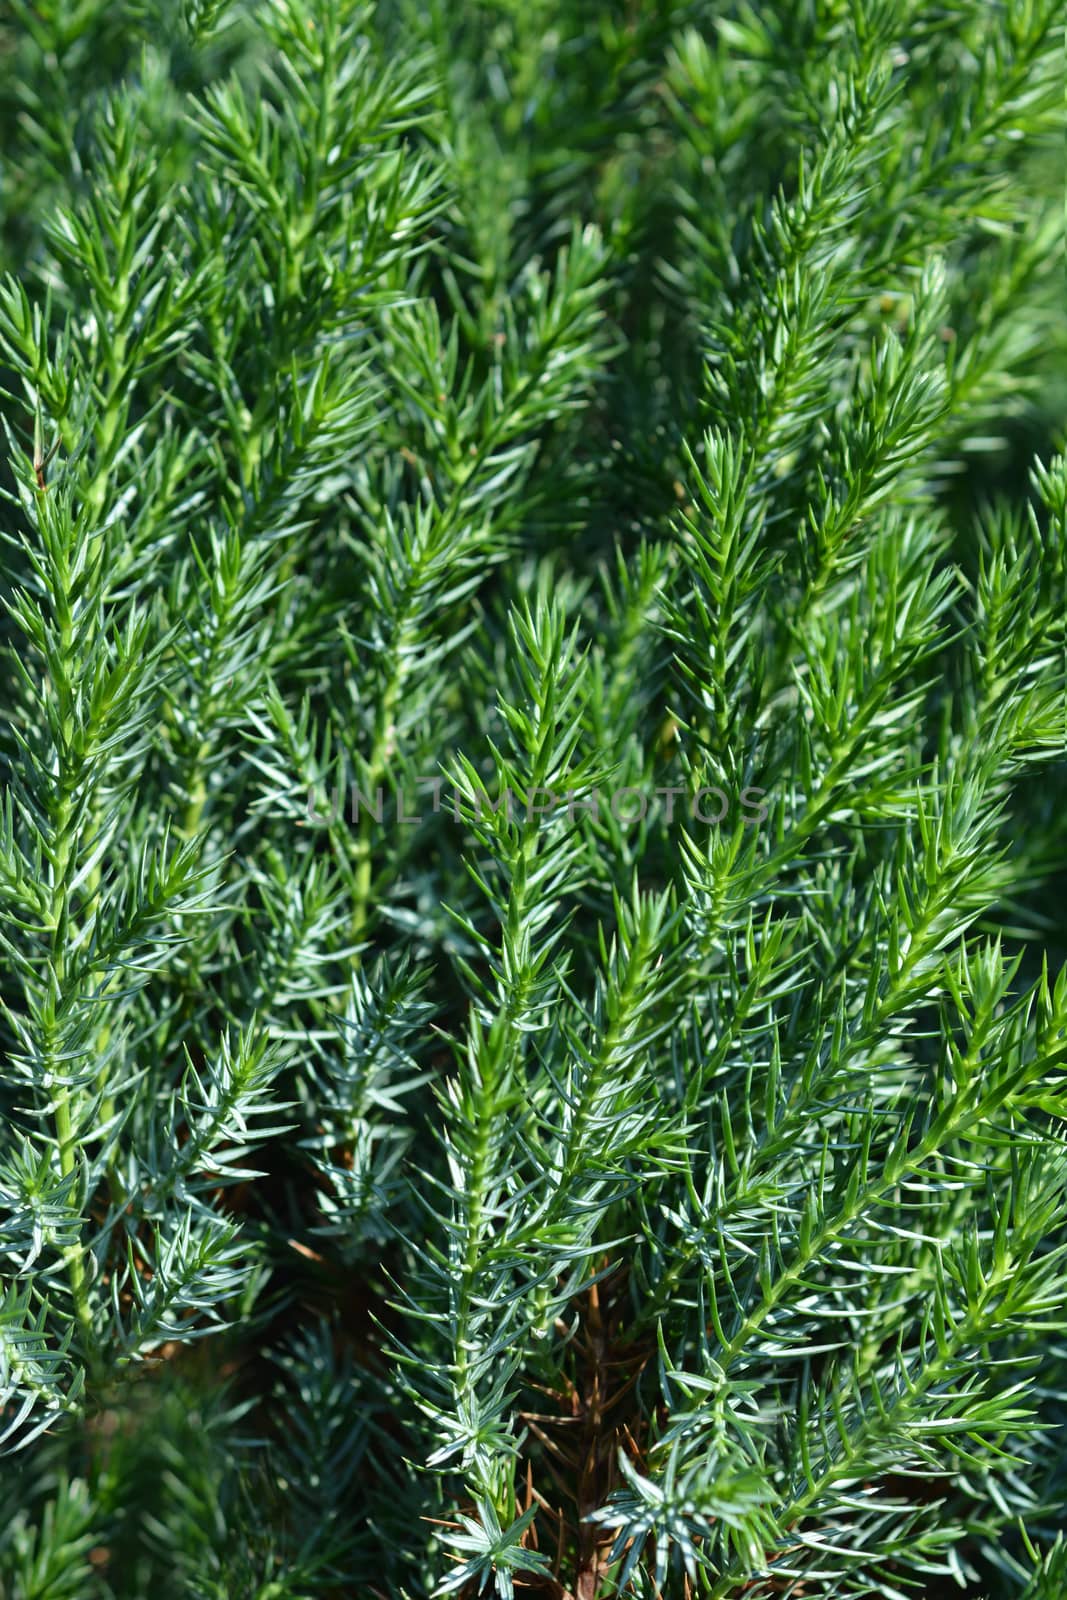 Chinese Juniper Stricta - Latin name - Juniperus chinensis Stricta